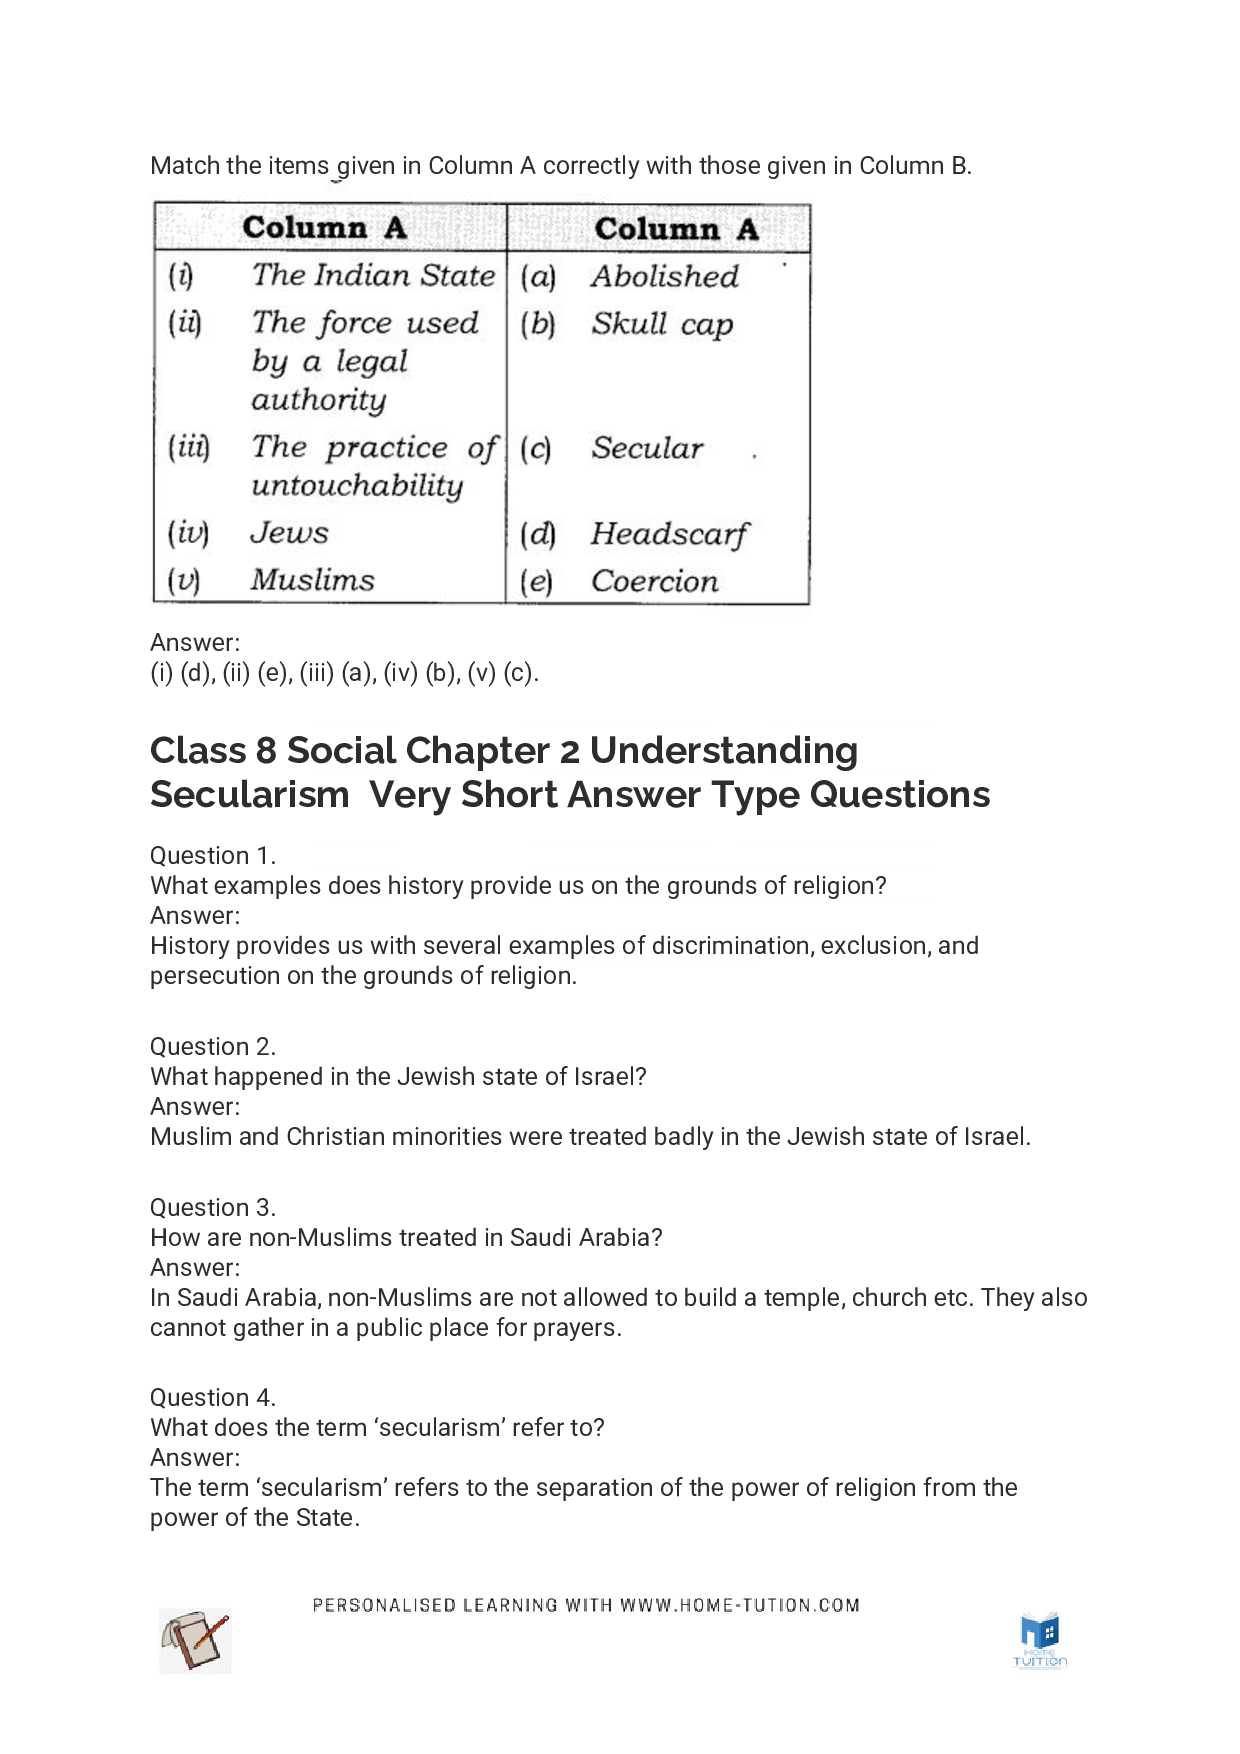 Chapter 2 Understanding secularism